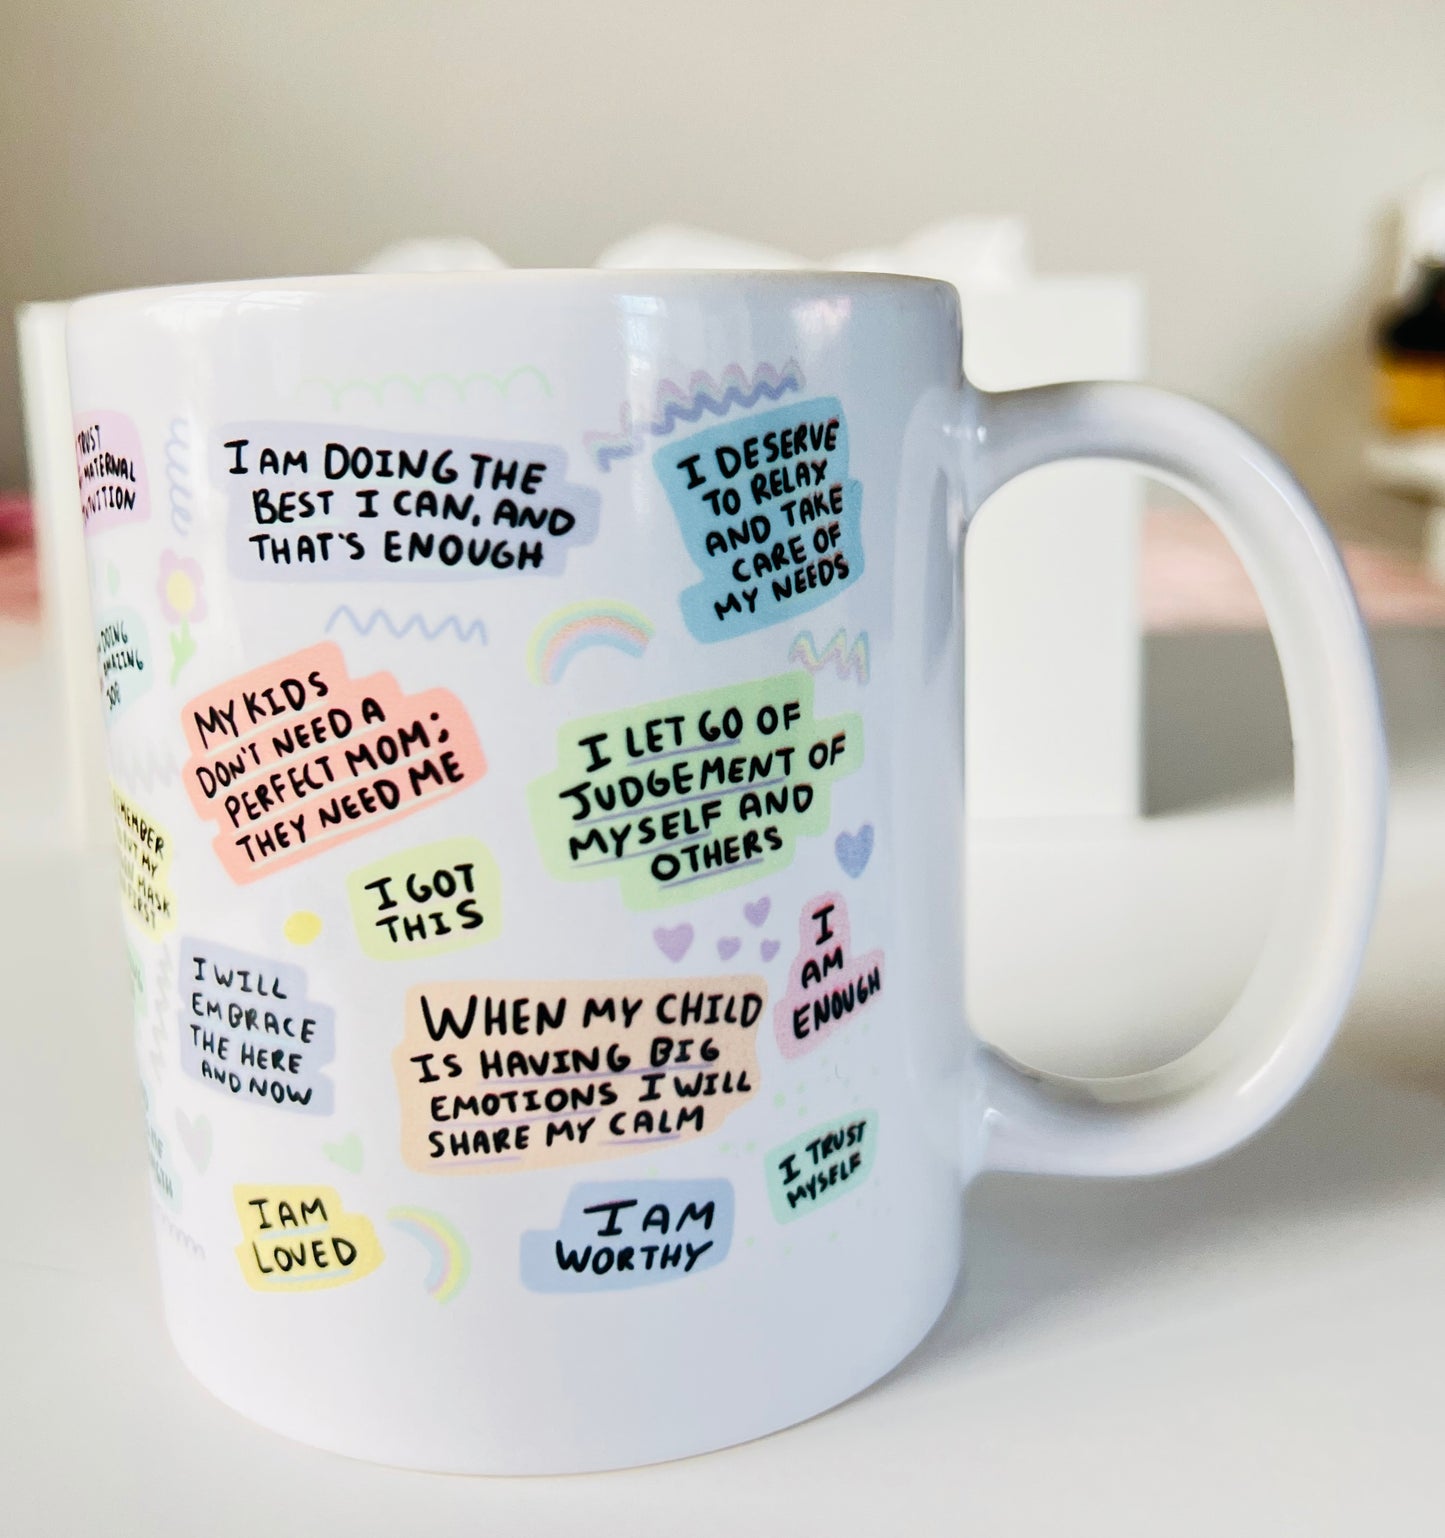 Mom’s Affirmations Mug, Positivity Coffee Mug, Mom’s care coffee mug.